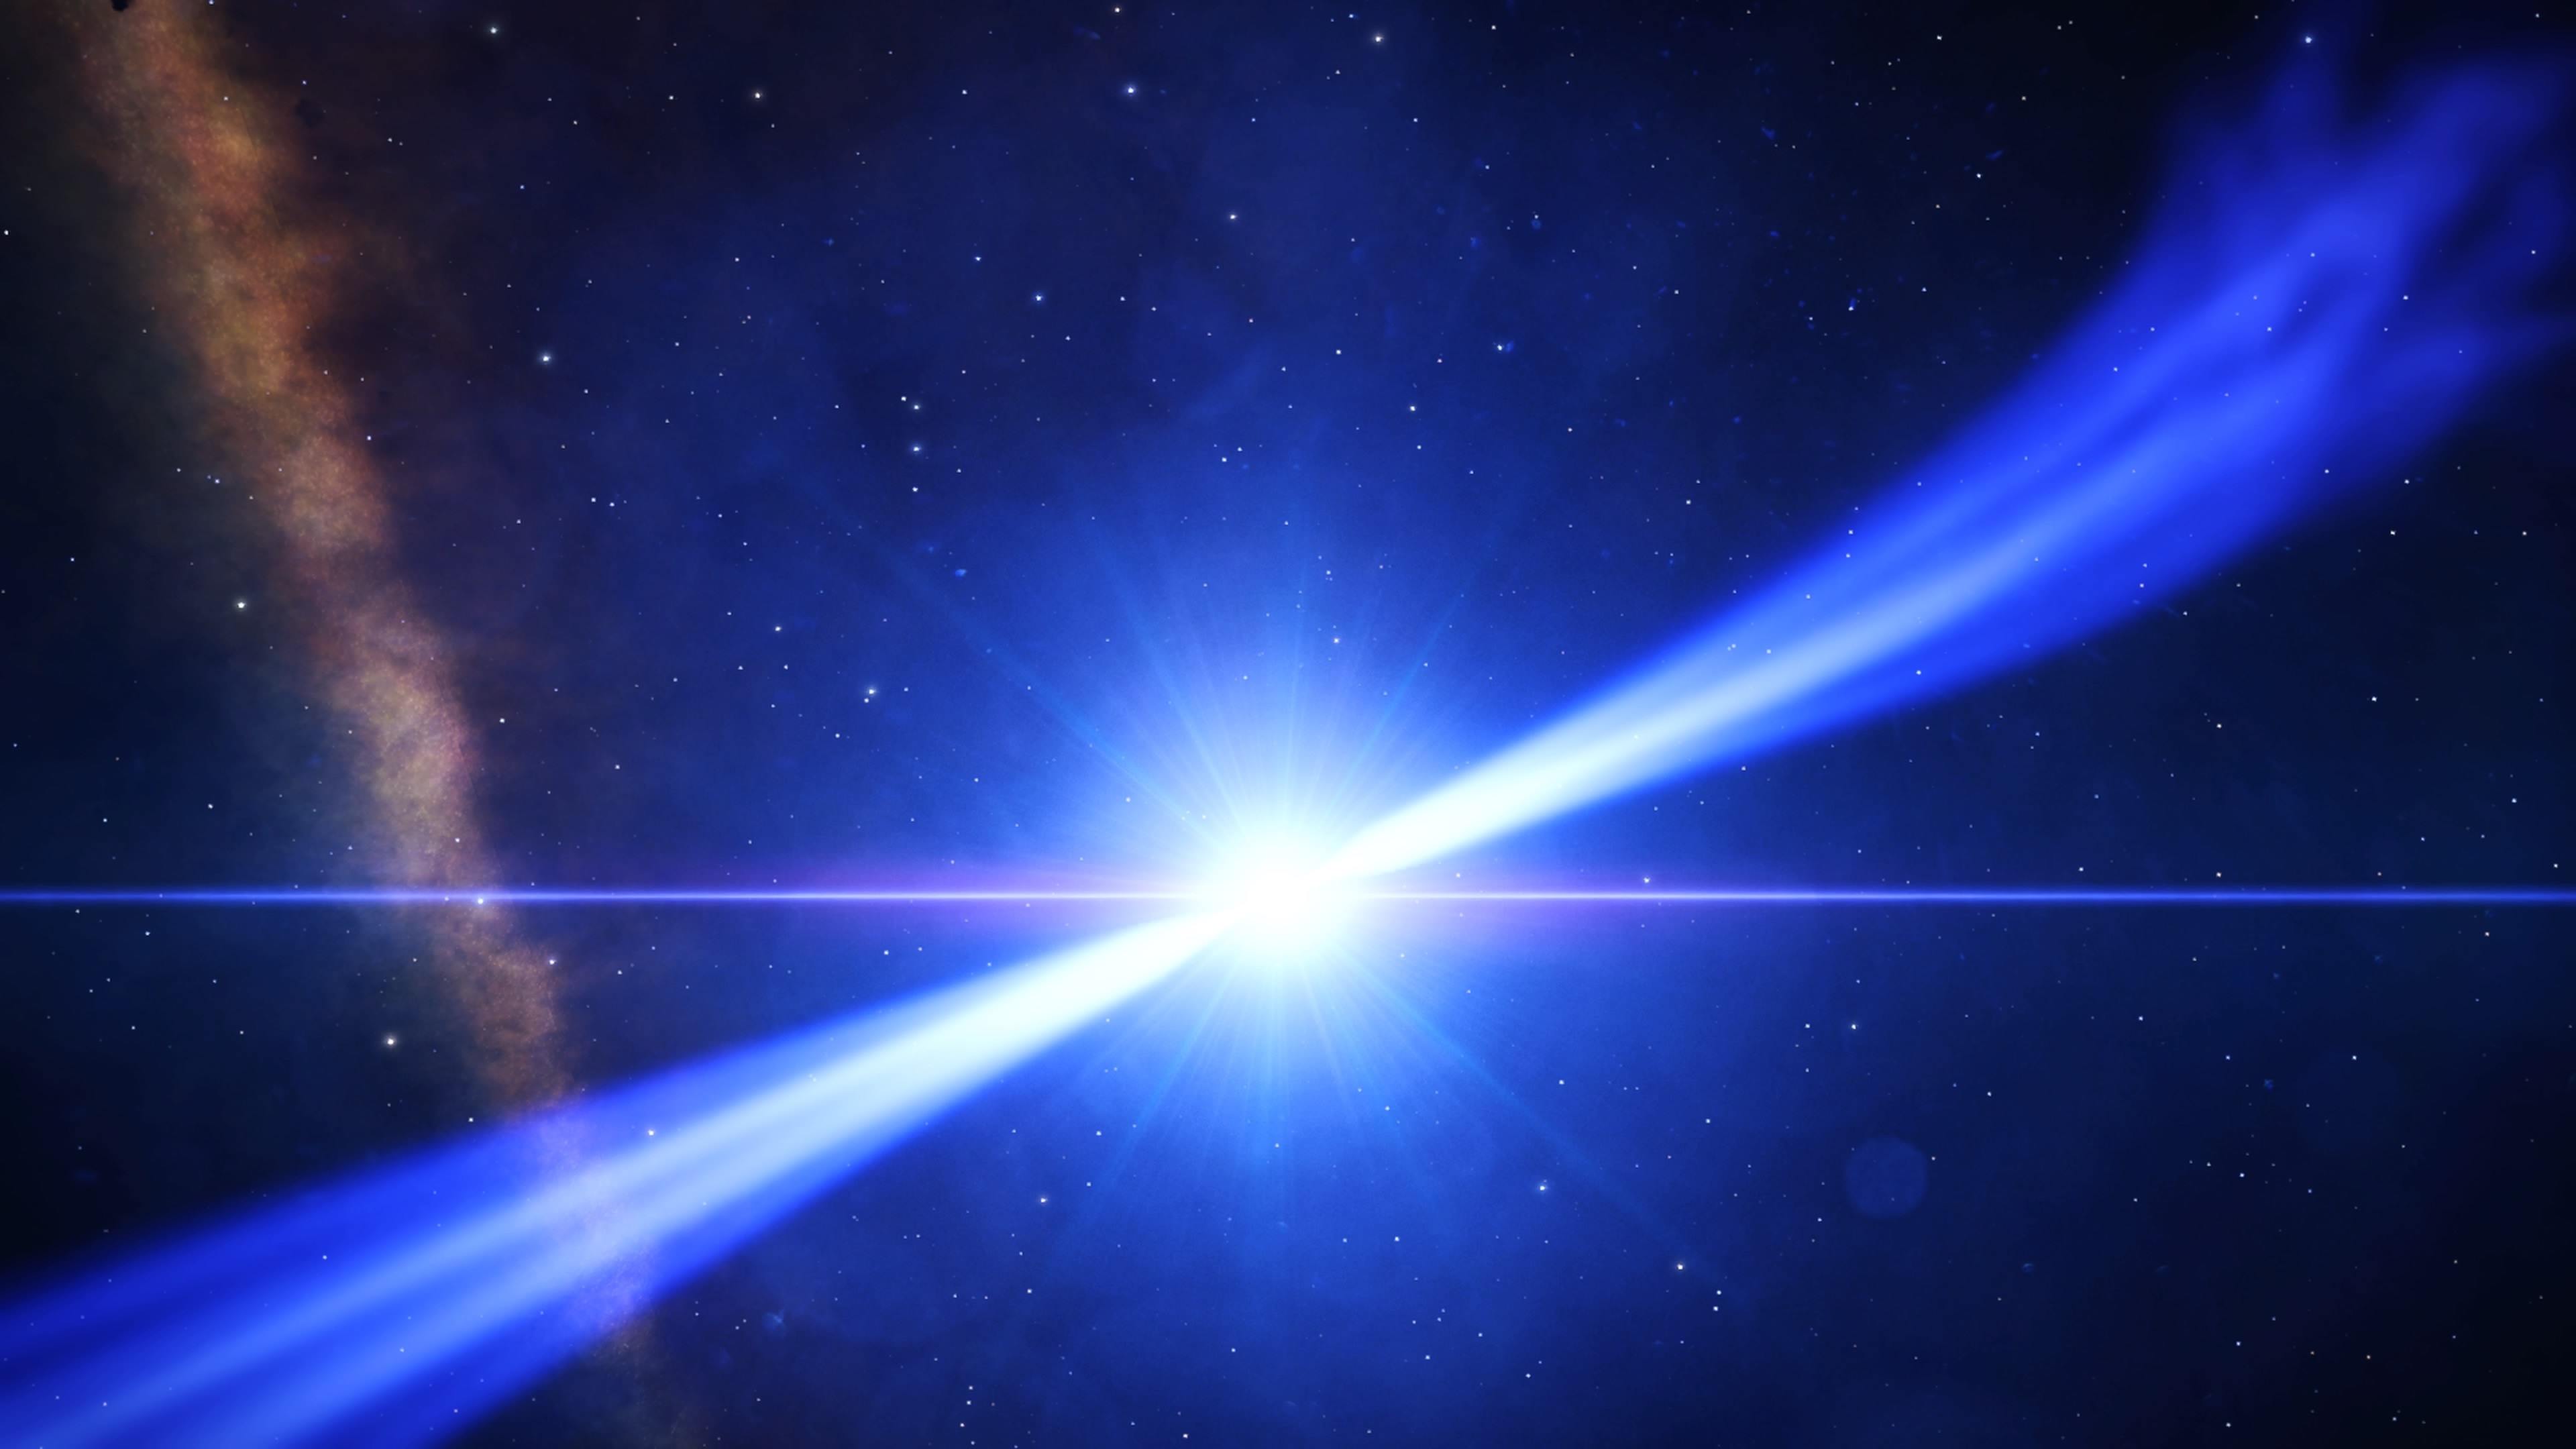 neutron star.jpg